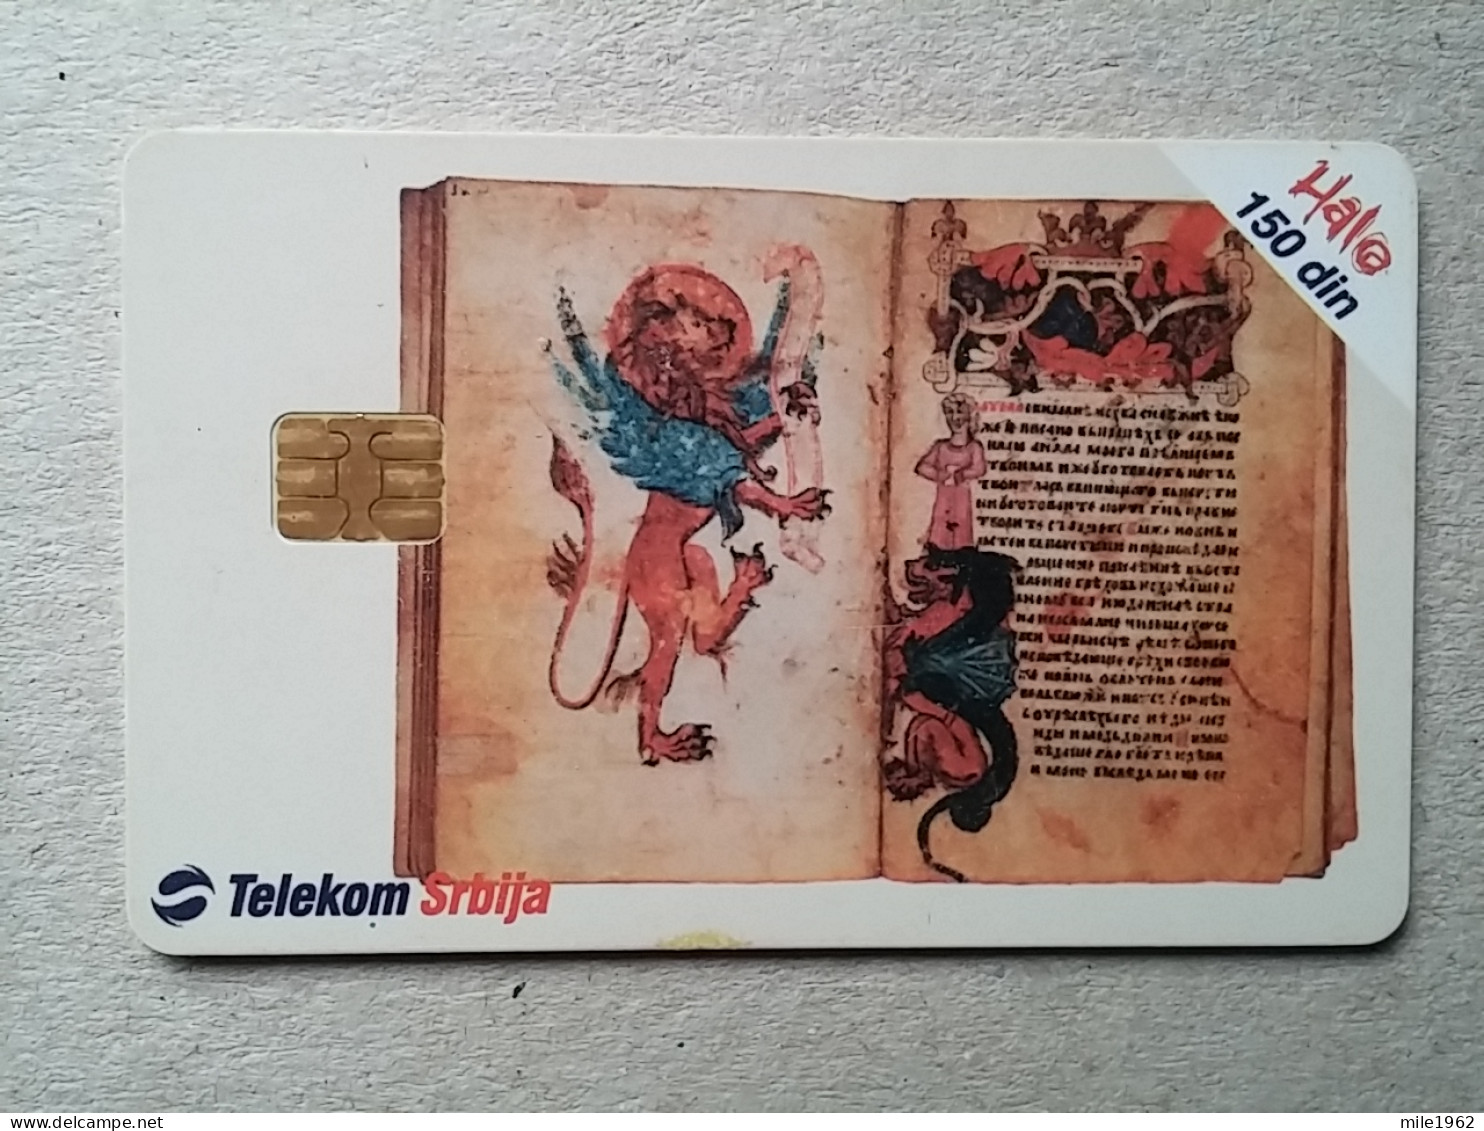 T-561 - SERBIA, Telecard, Télécarte, Phonecard - Joegoslavië